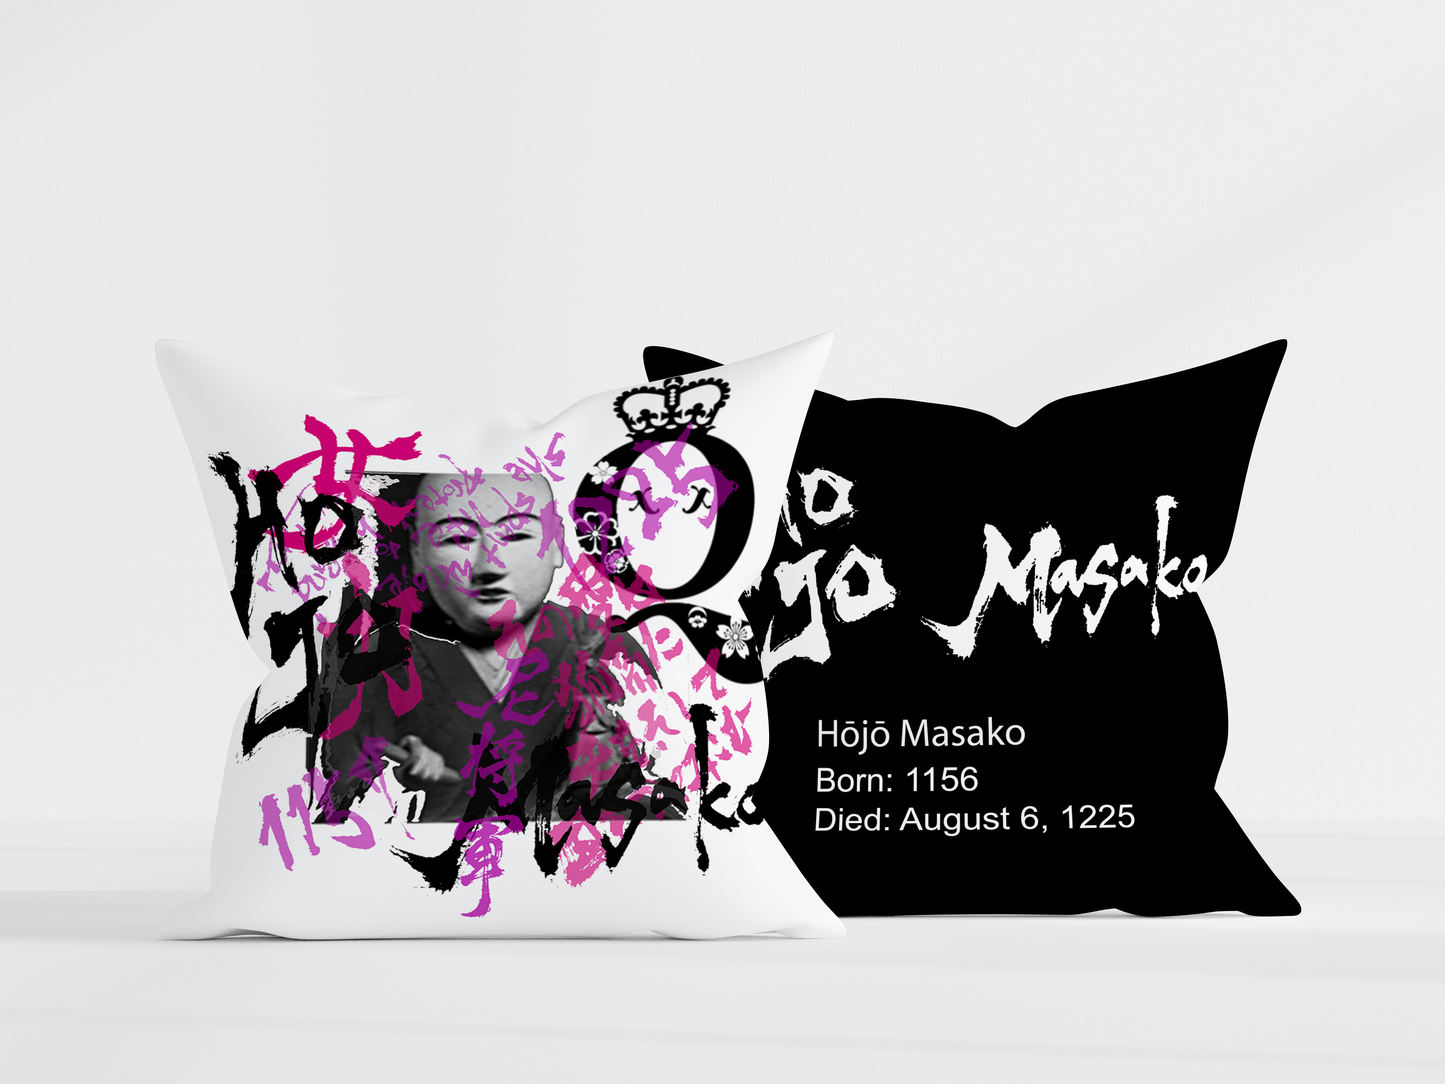 Hojo Masako Throw Pillow 22x22 - Black Back